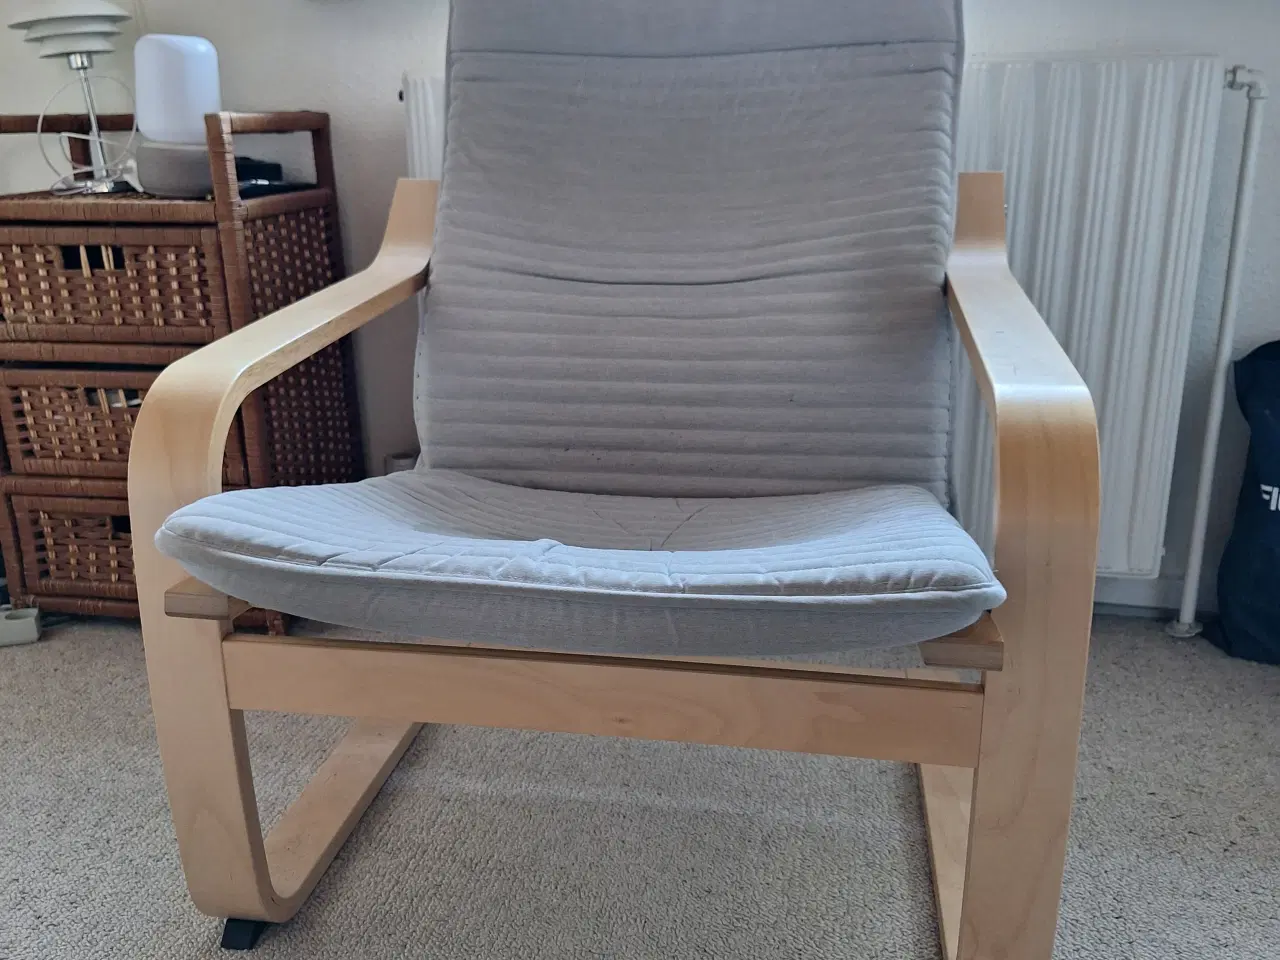 Billede 3 - 2 stole fra Ikea 